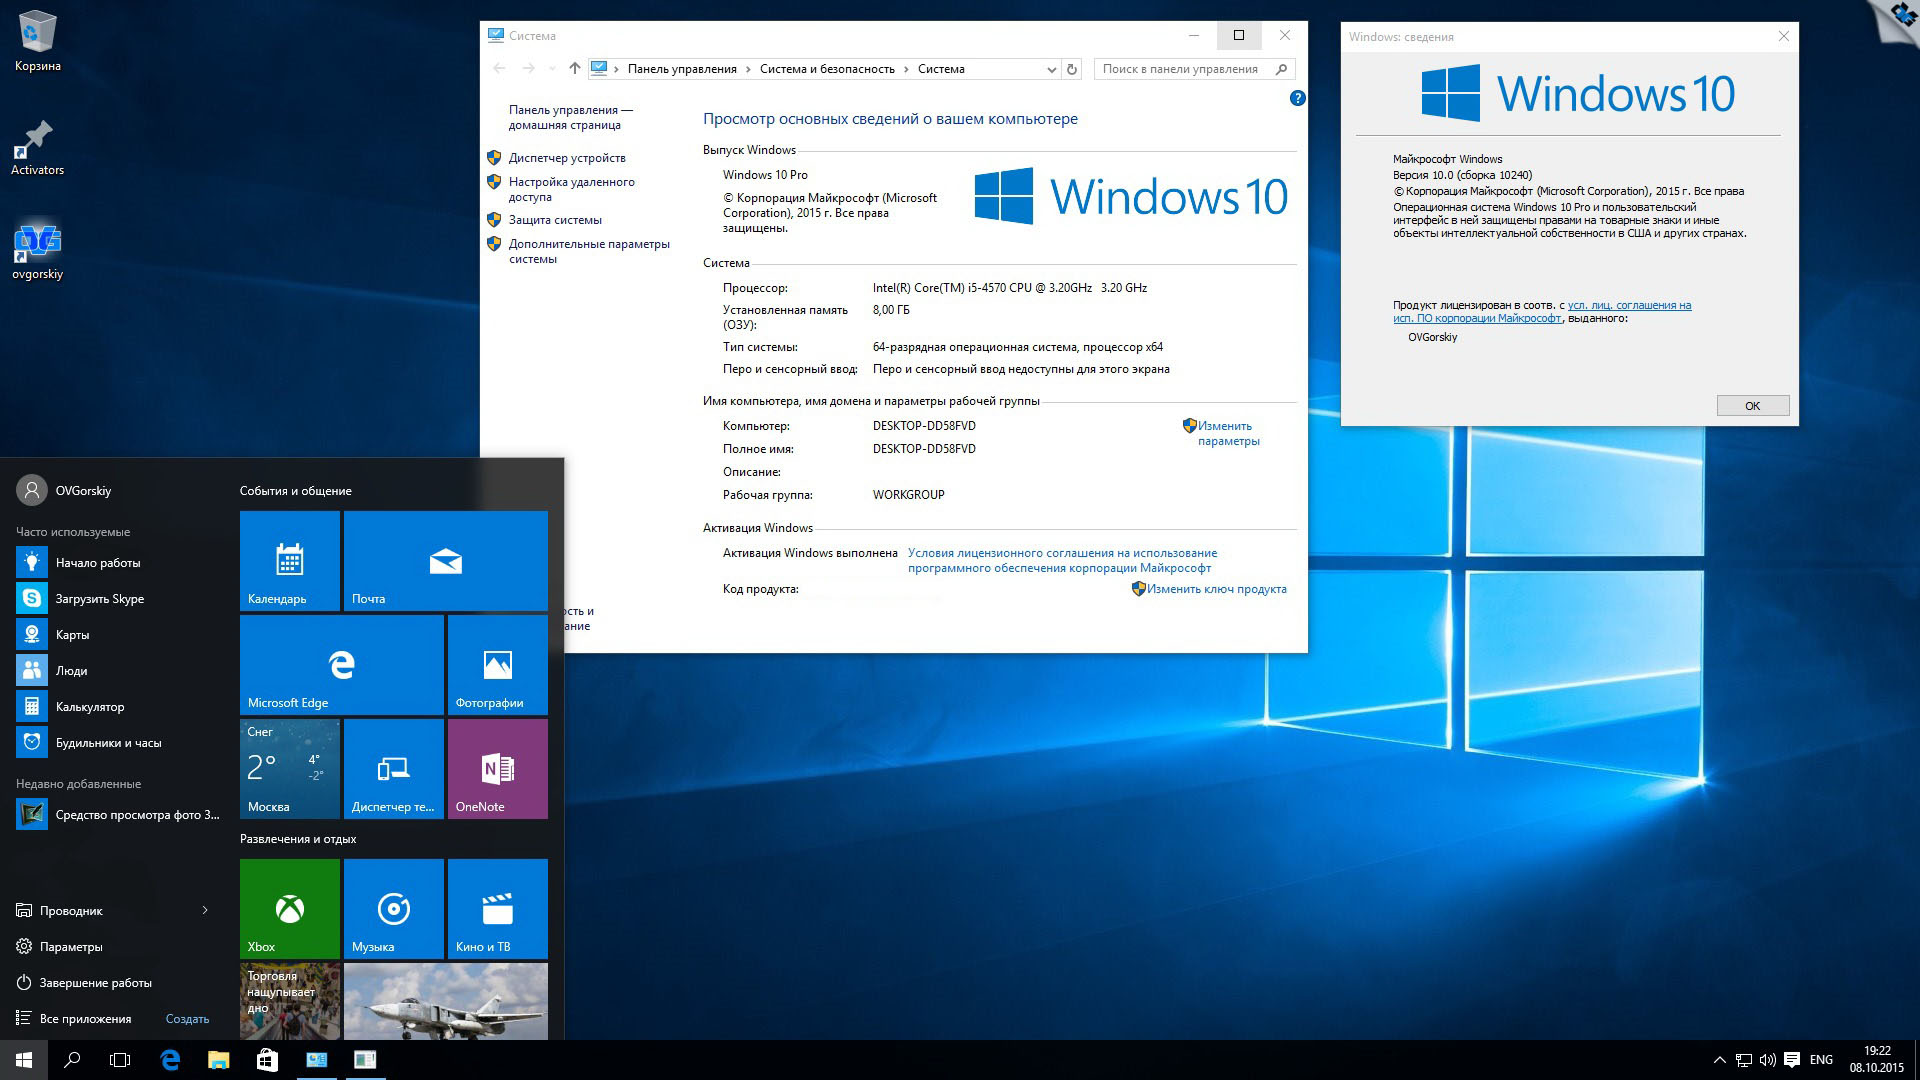 Windows 10 ltcs. Оперативная система виндовс 10. Первая версия виндовс 10. Microsoft Windows 10 Pro. Windows 10 2015 года.